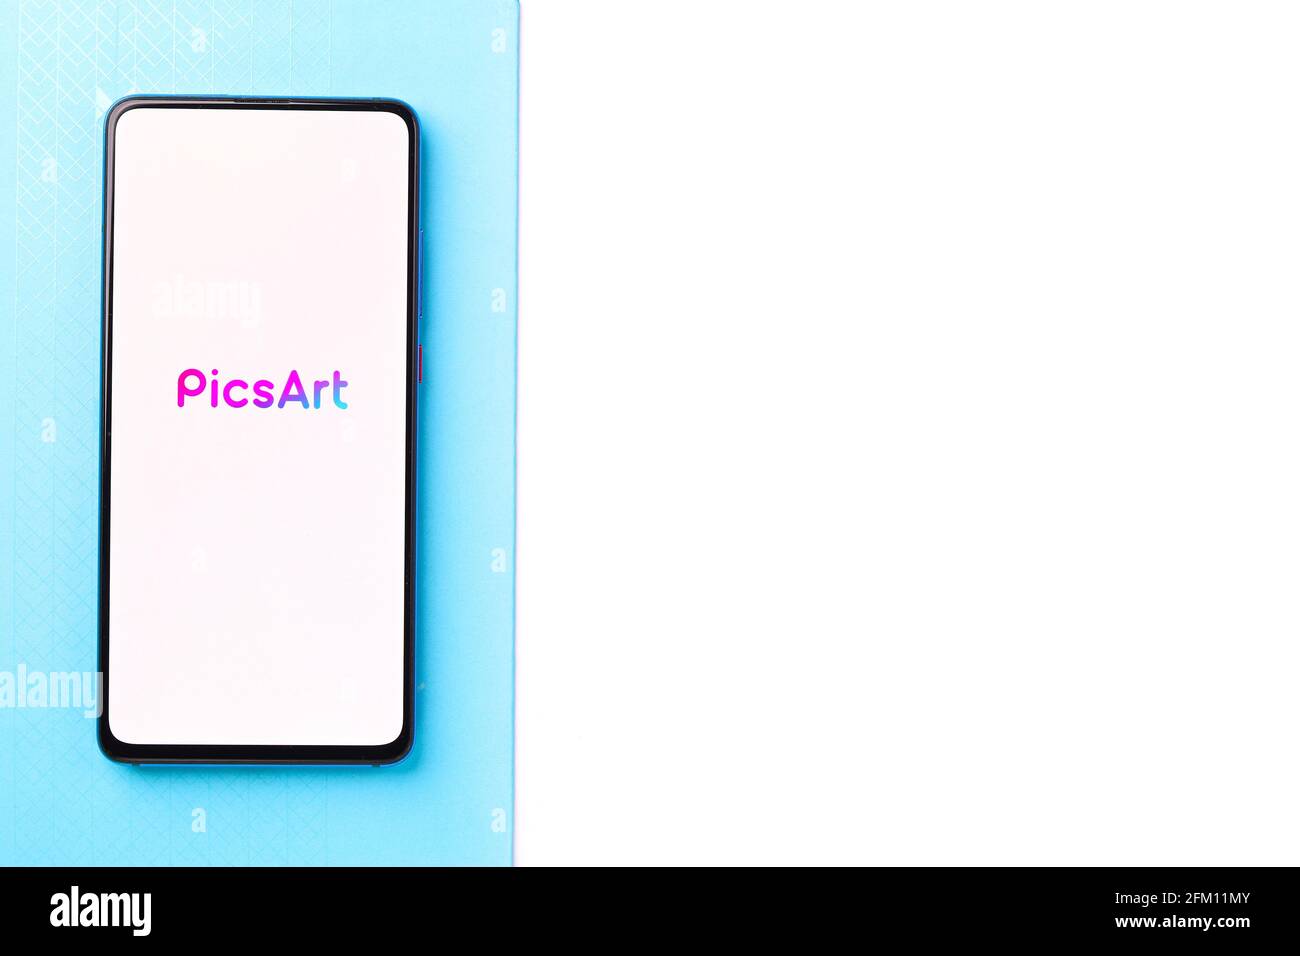 Assam, india - May 04, 2021 : PicsArt on phone screen stock image. Stock Photo